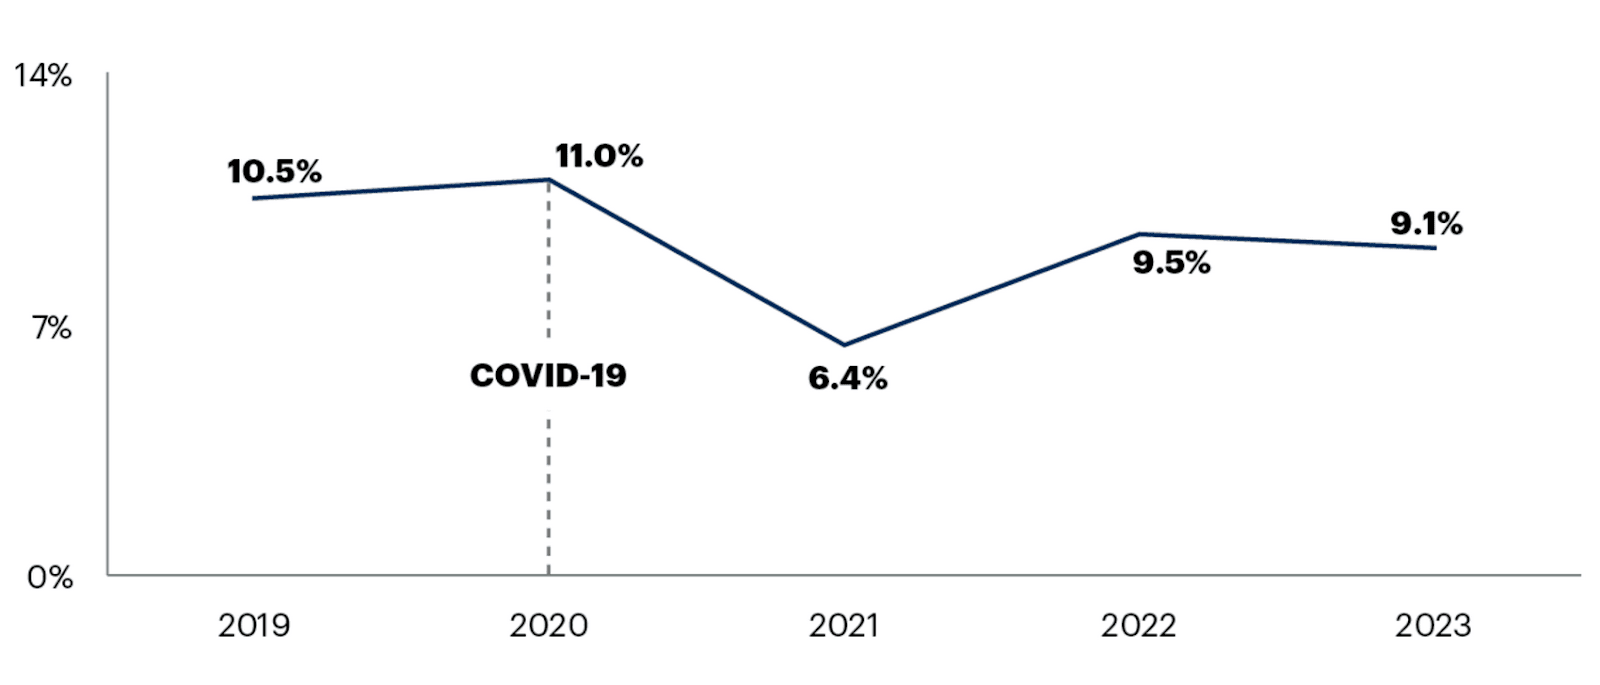 2023 Marketing Budget as a Percent of Total Revenue (2019-2023)